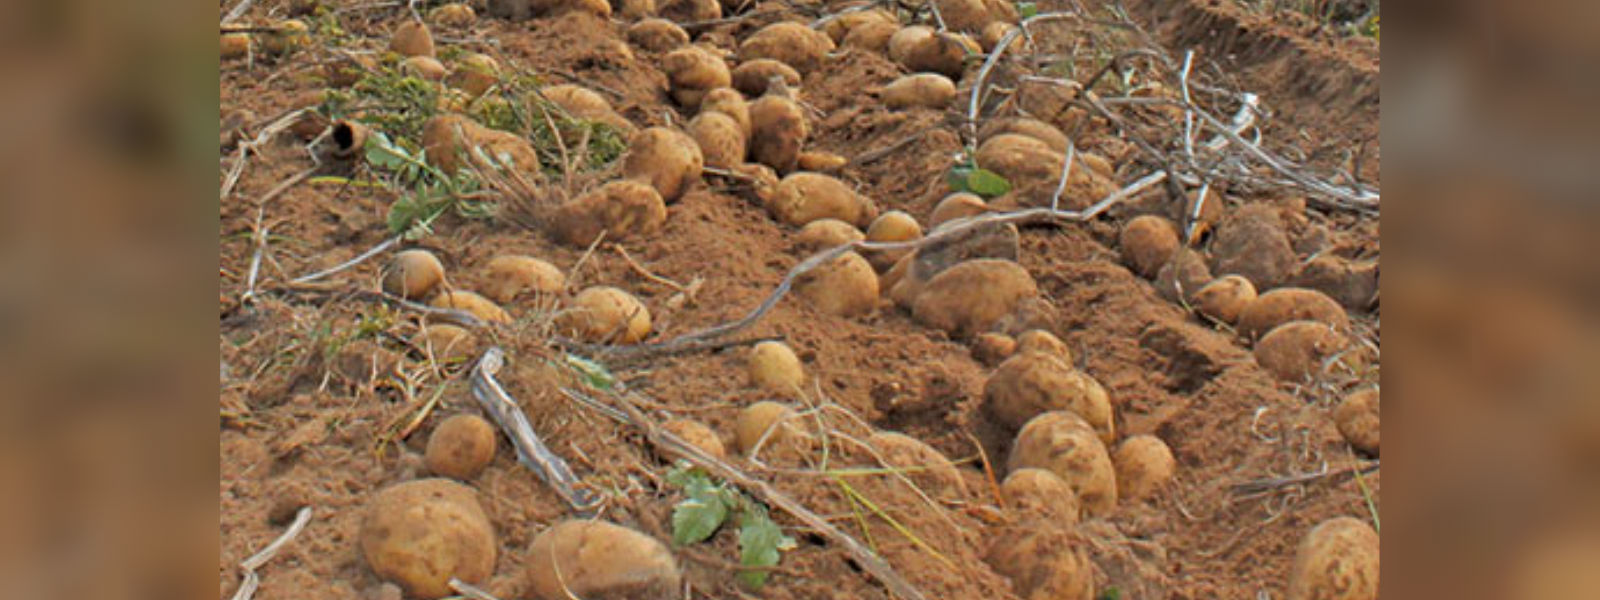 Government fails to pay potato farmers